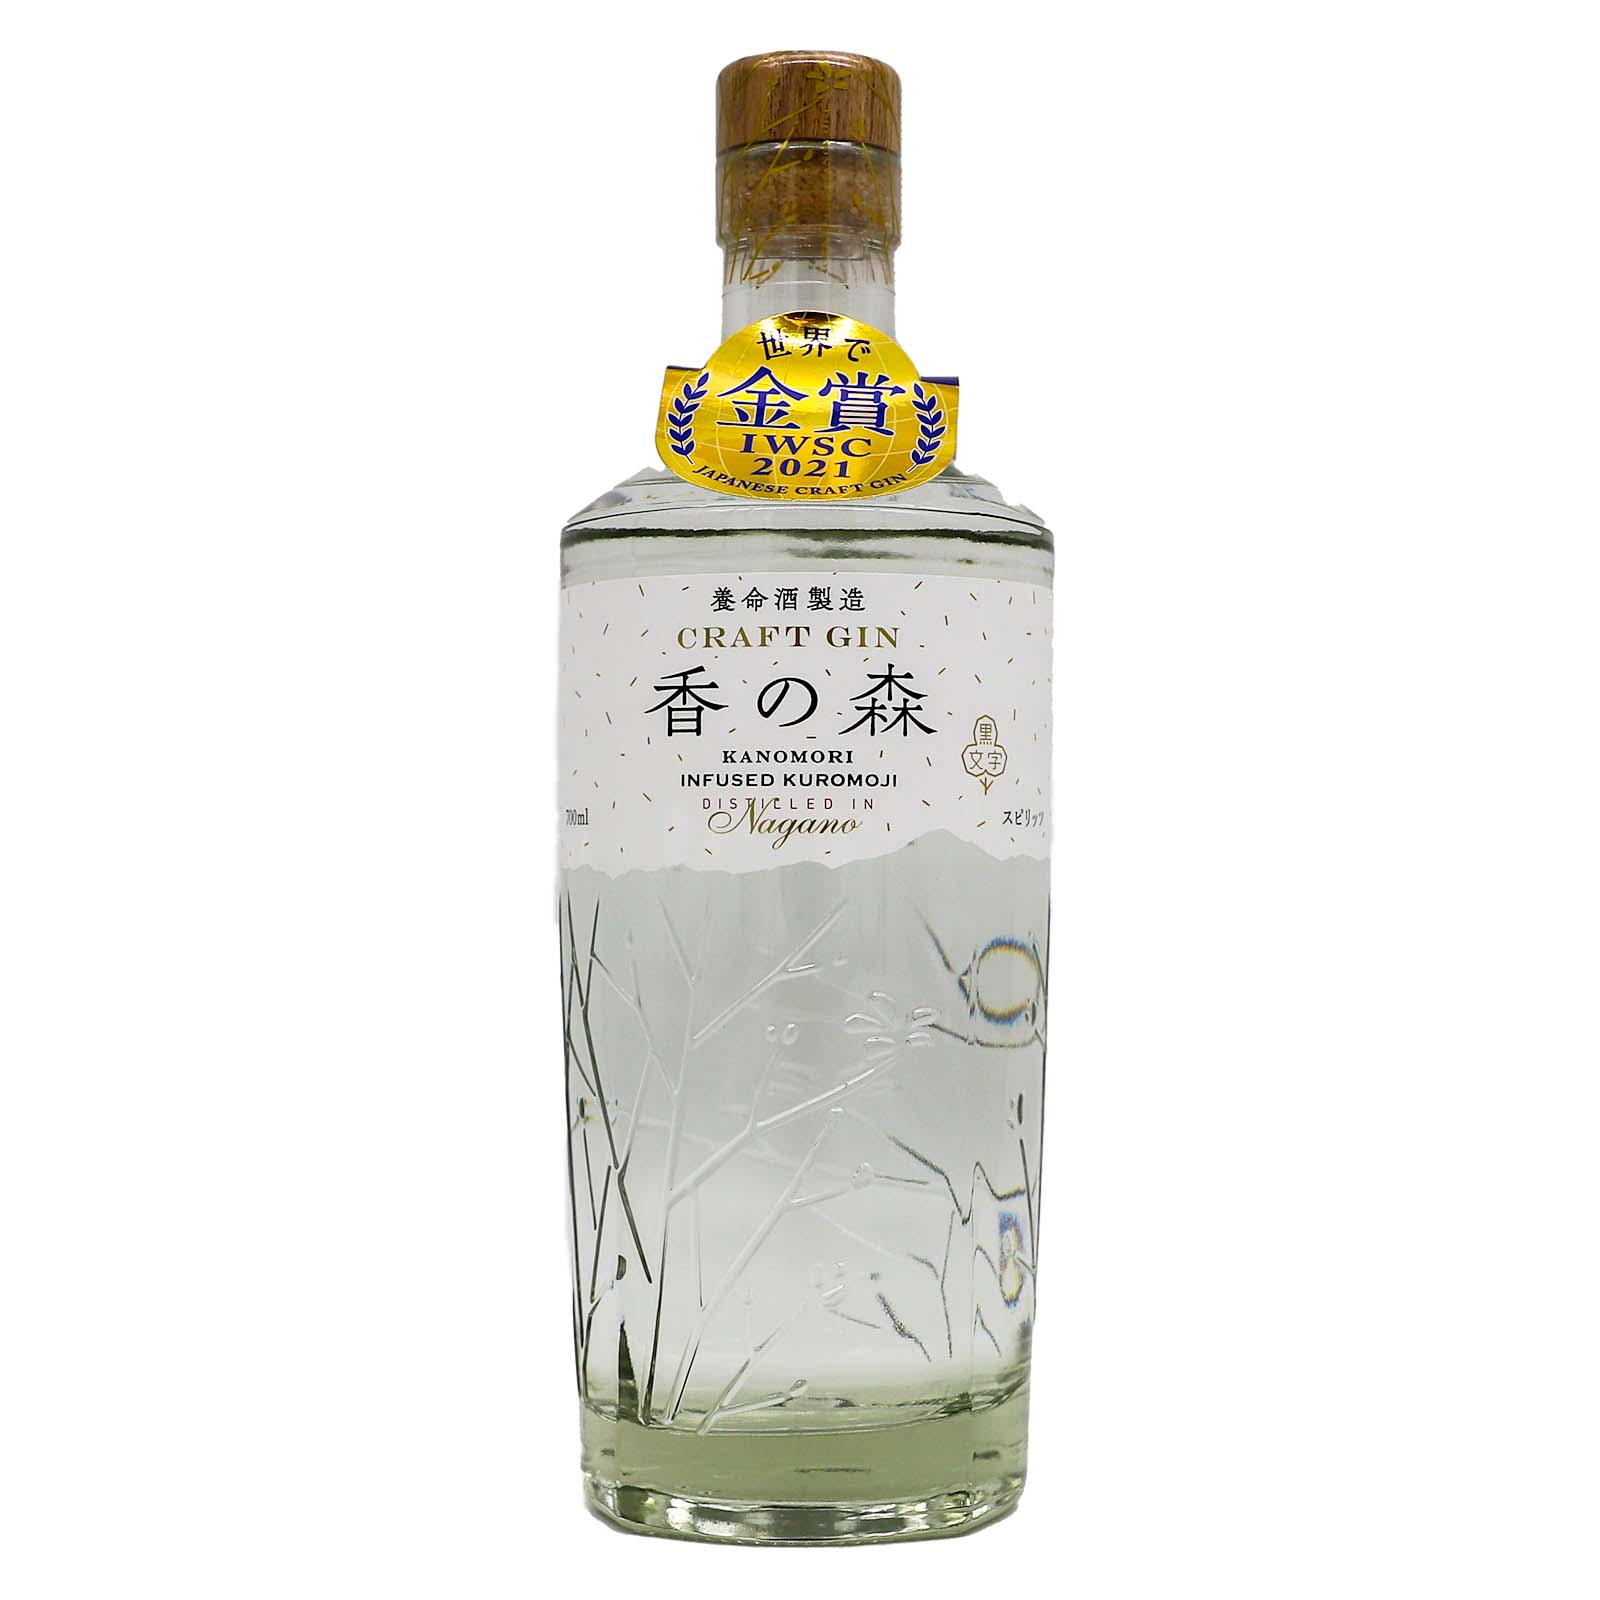 Kanomori Infused Kuromoji Japanese Craft Gin